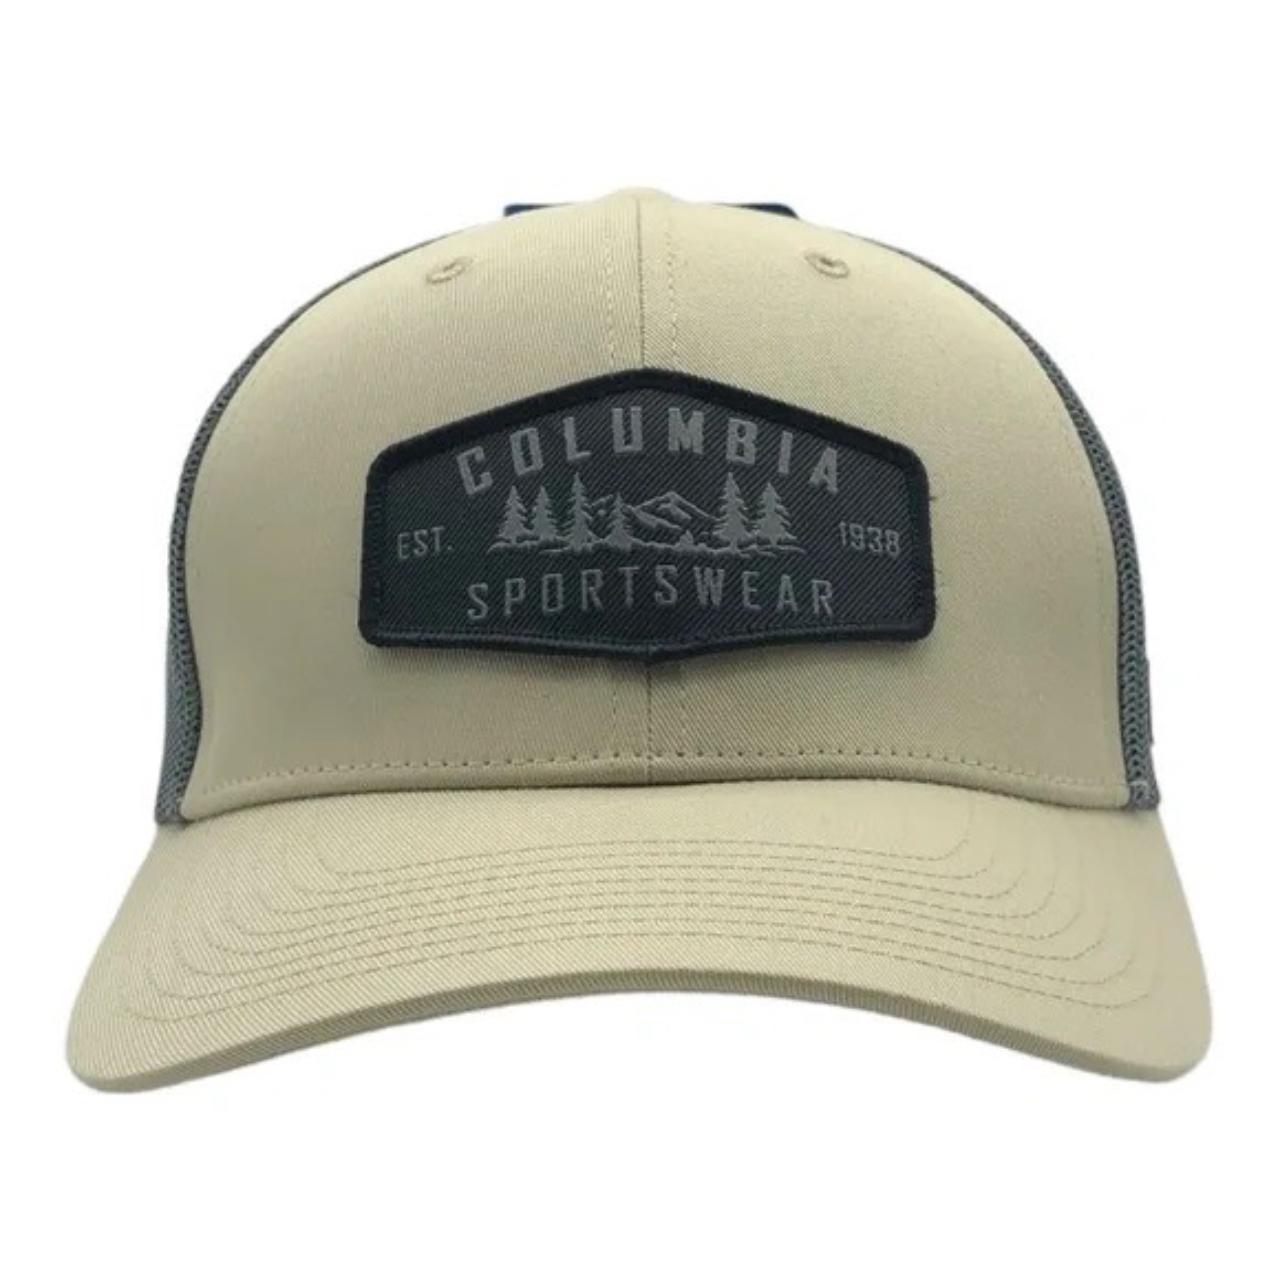 Columbia Authentic Snapback Trucker Hat Adjustable Cap